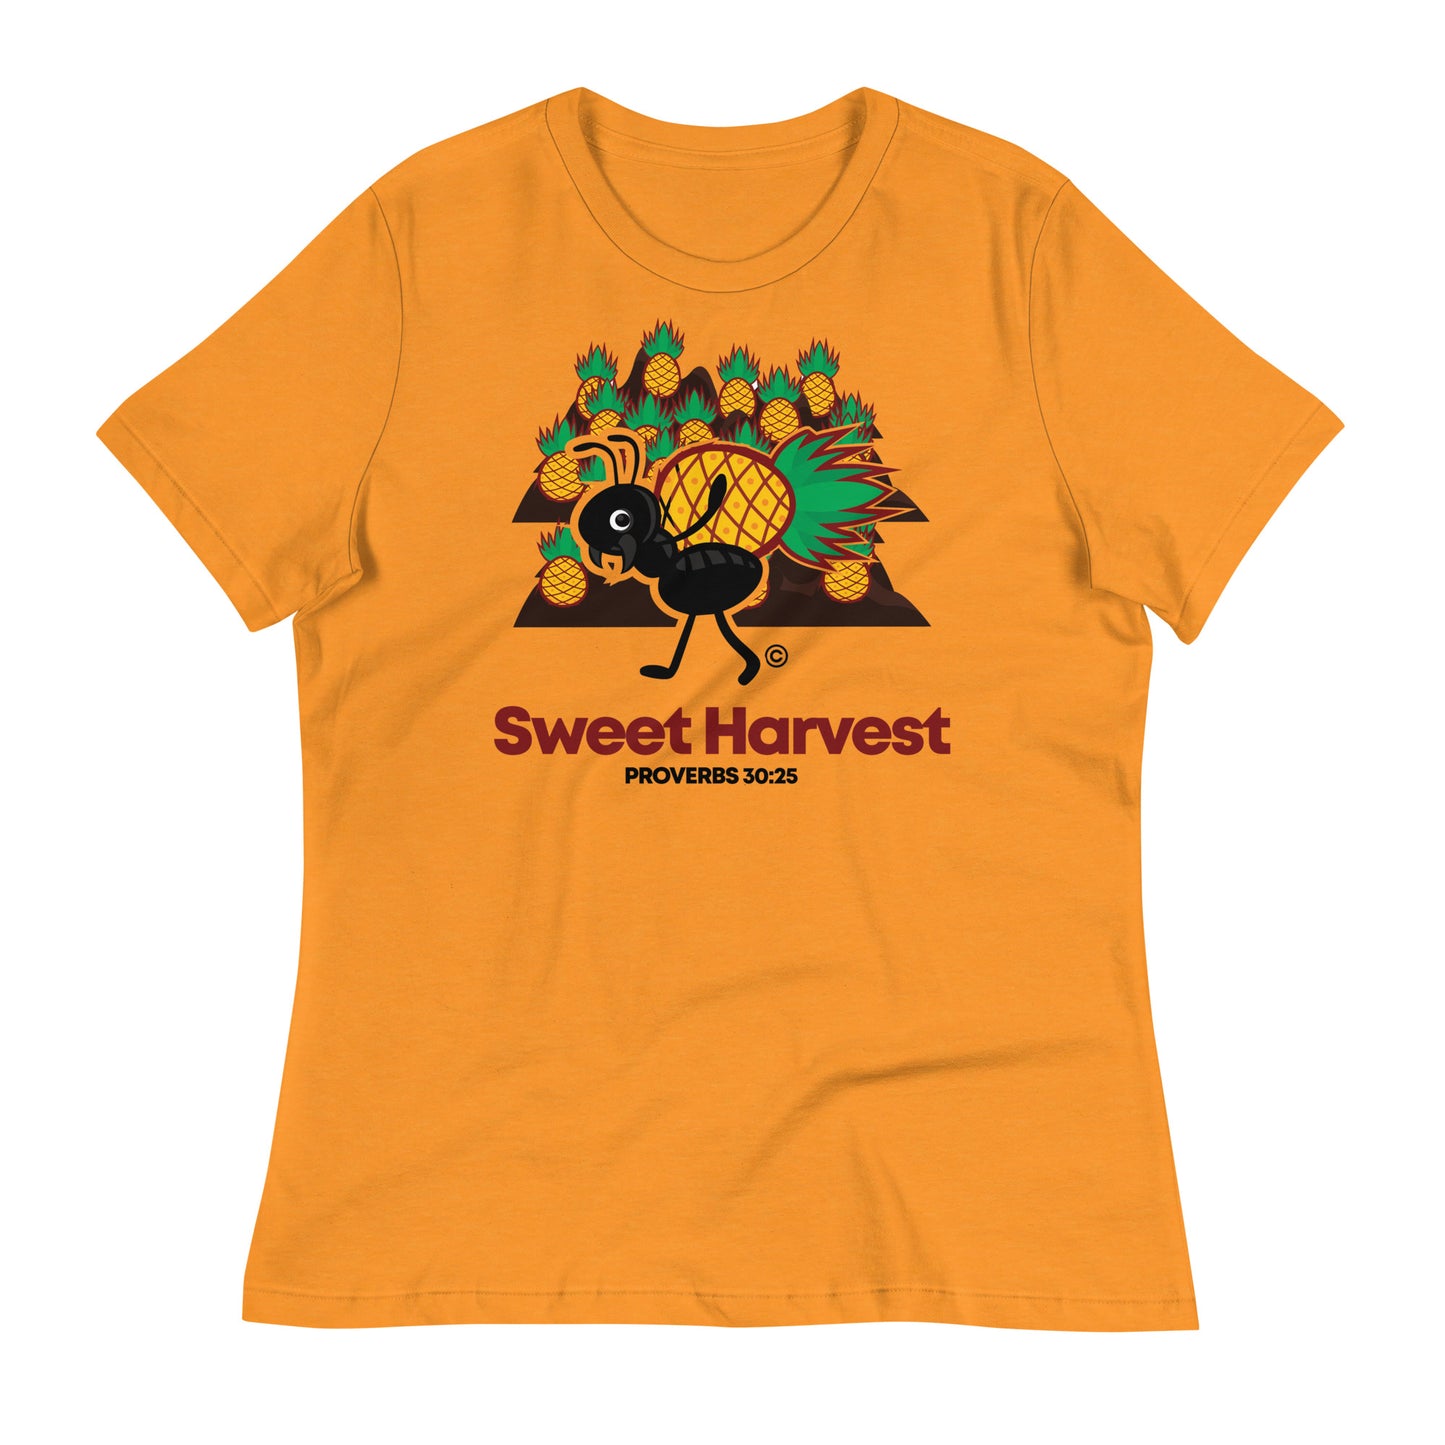 Sweet Harvest Women's Relaxed T-Shirt